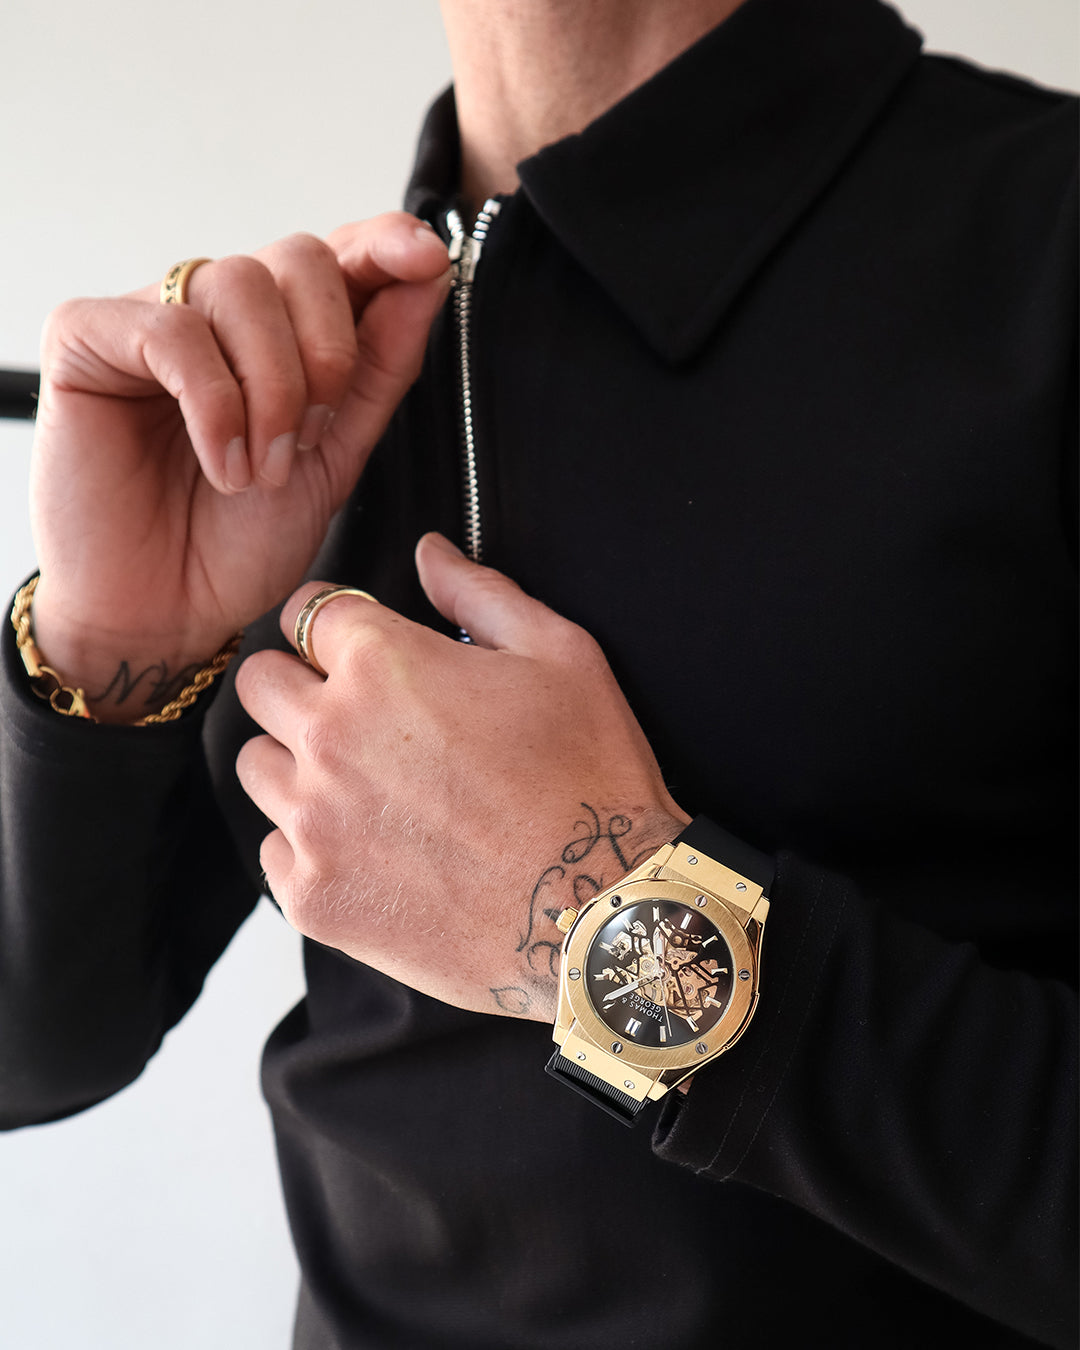 George Men's Analog Black and Bracelet Watch Set | eBay